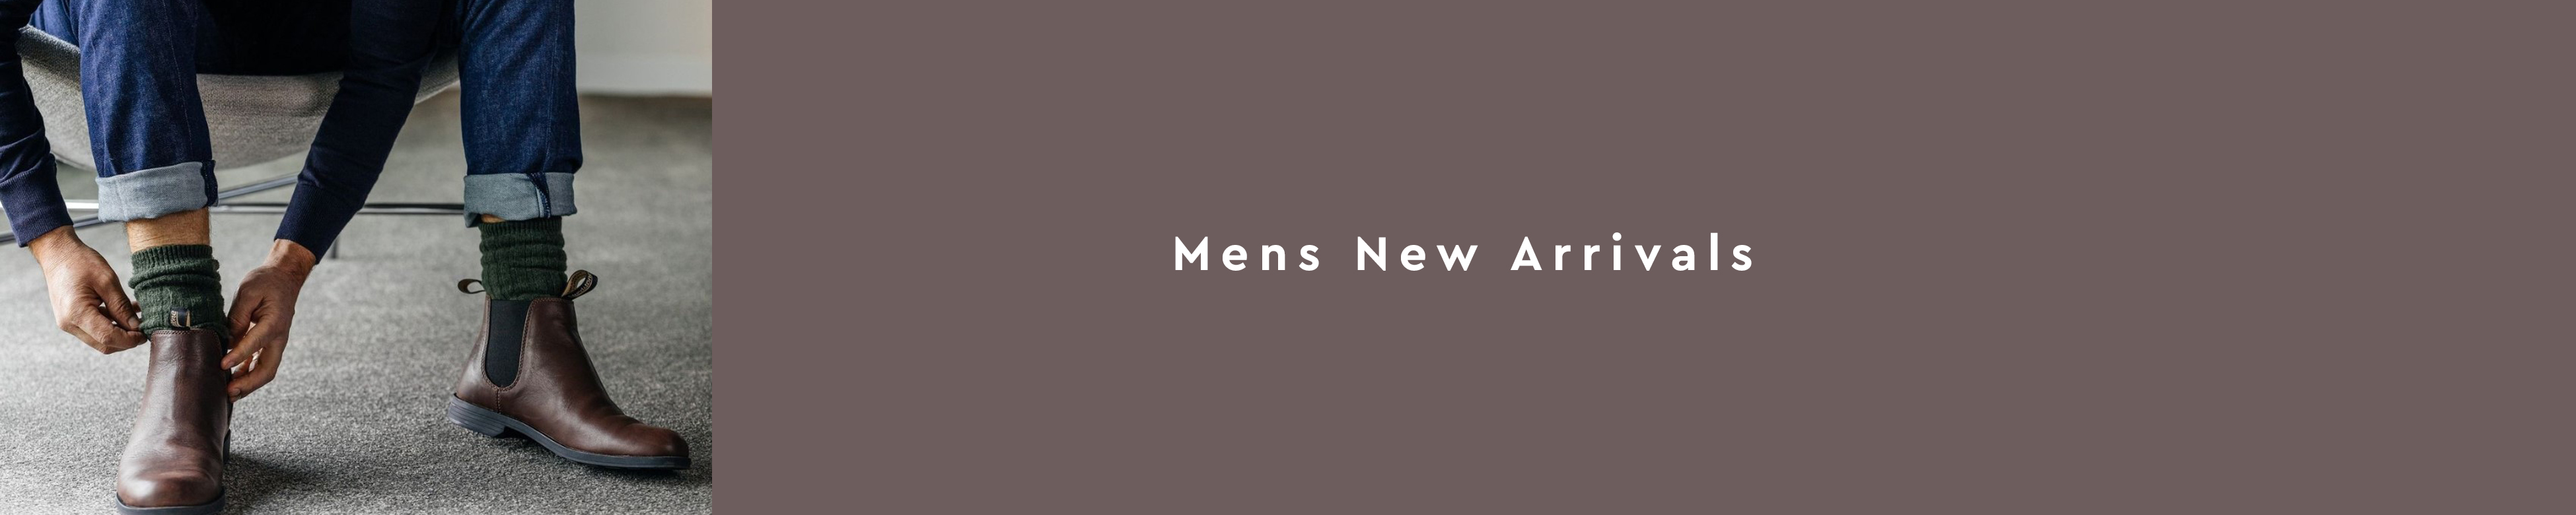 Mens_New_Arrivals_banner_2